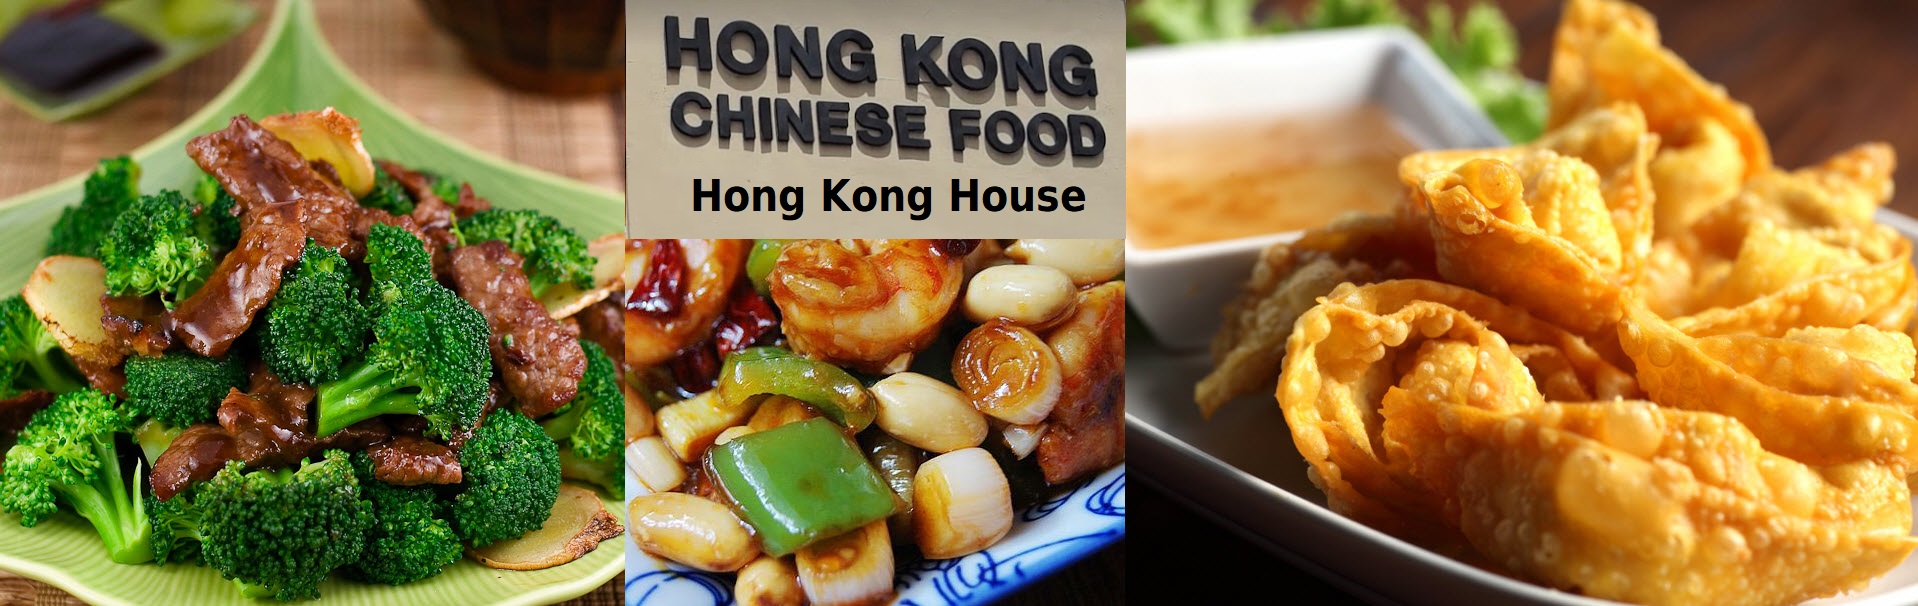 Your favorite Chinese food at Hong Kong House